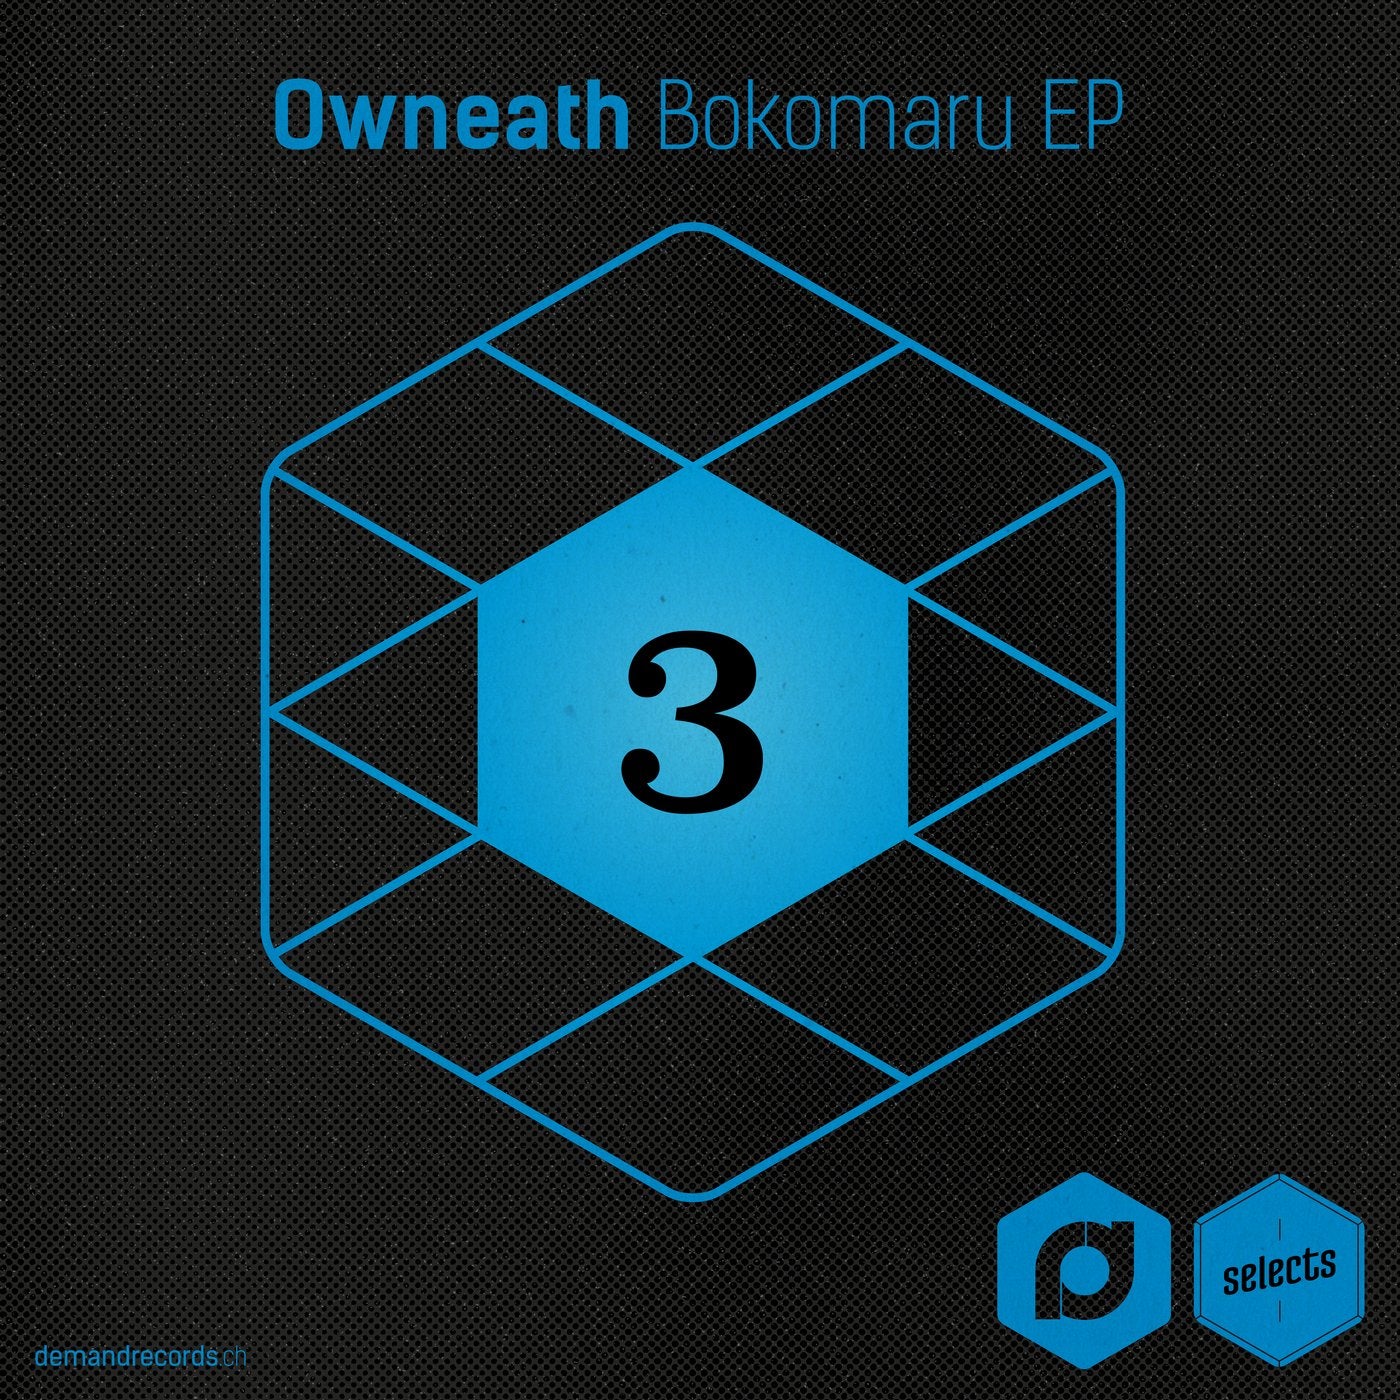 Demand Selects #3 - Bokomaru EP